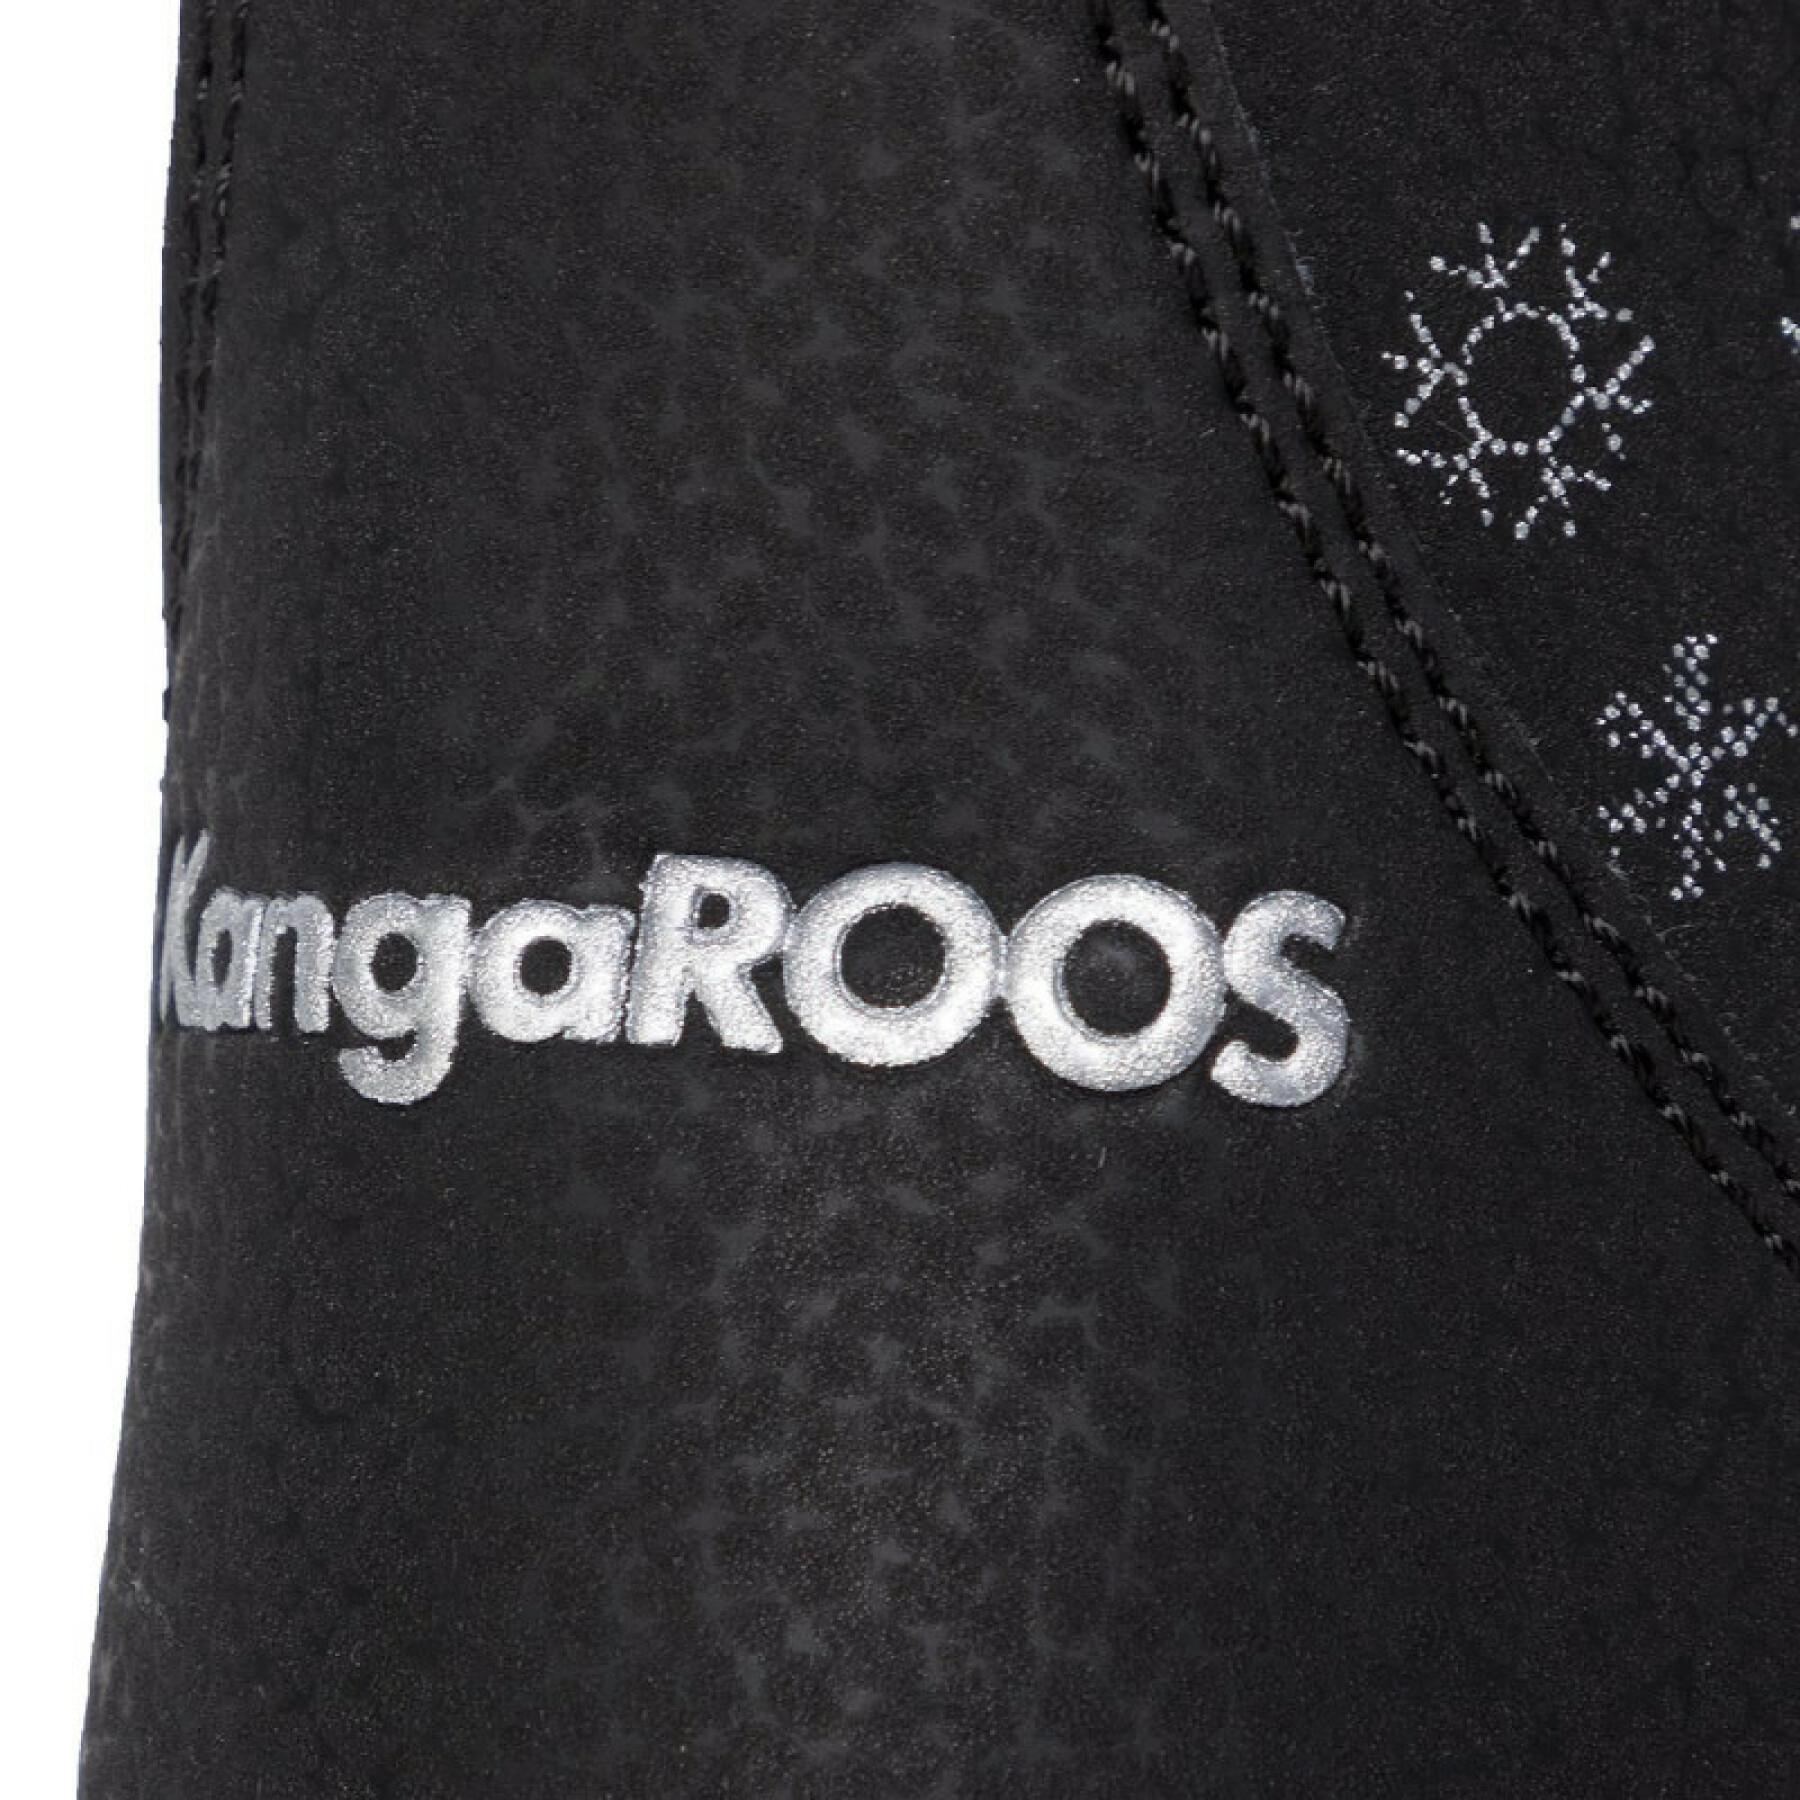 Stivali per bambini KangaROOS K-Glaze RTX